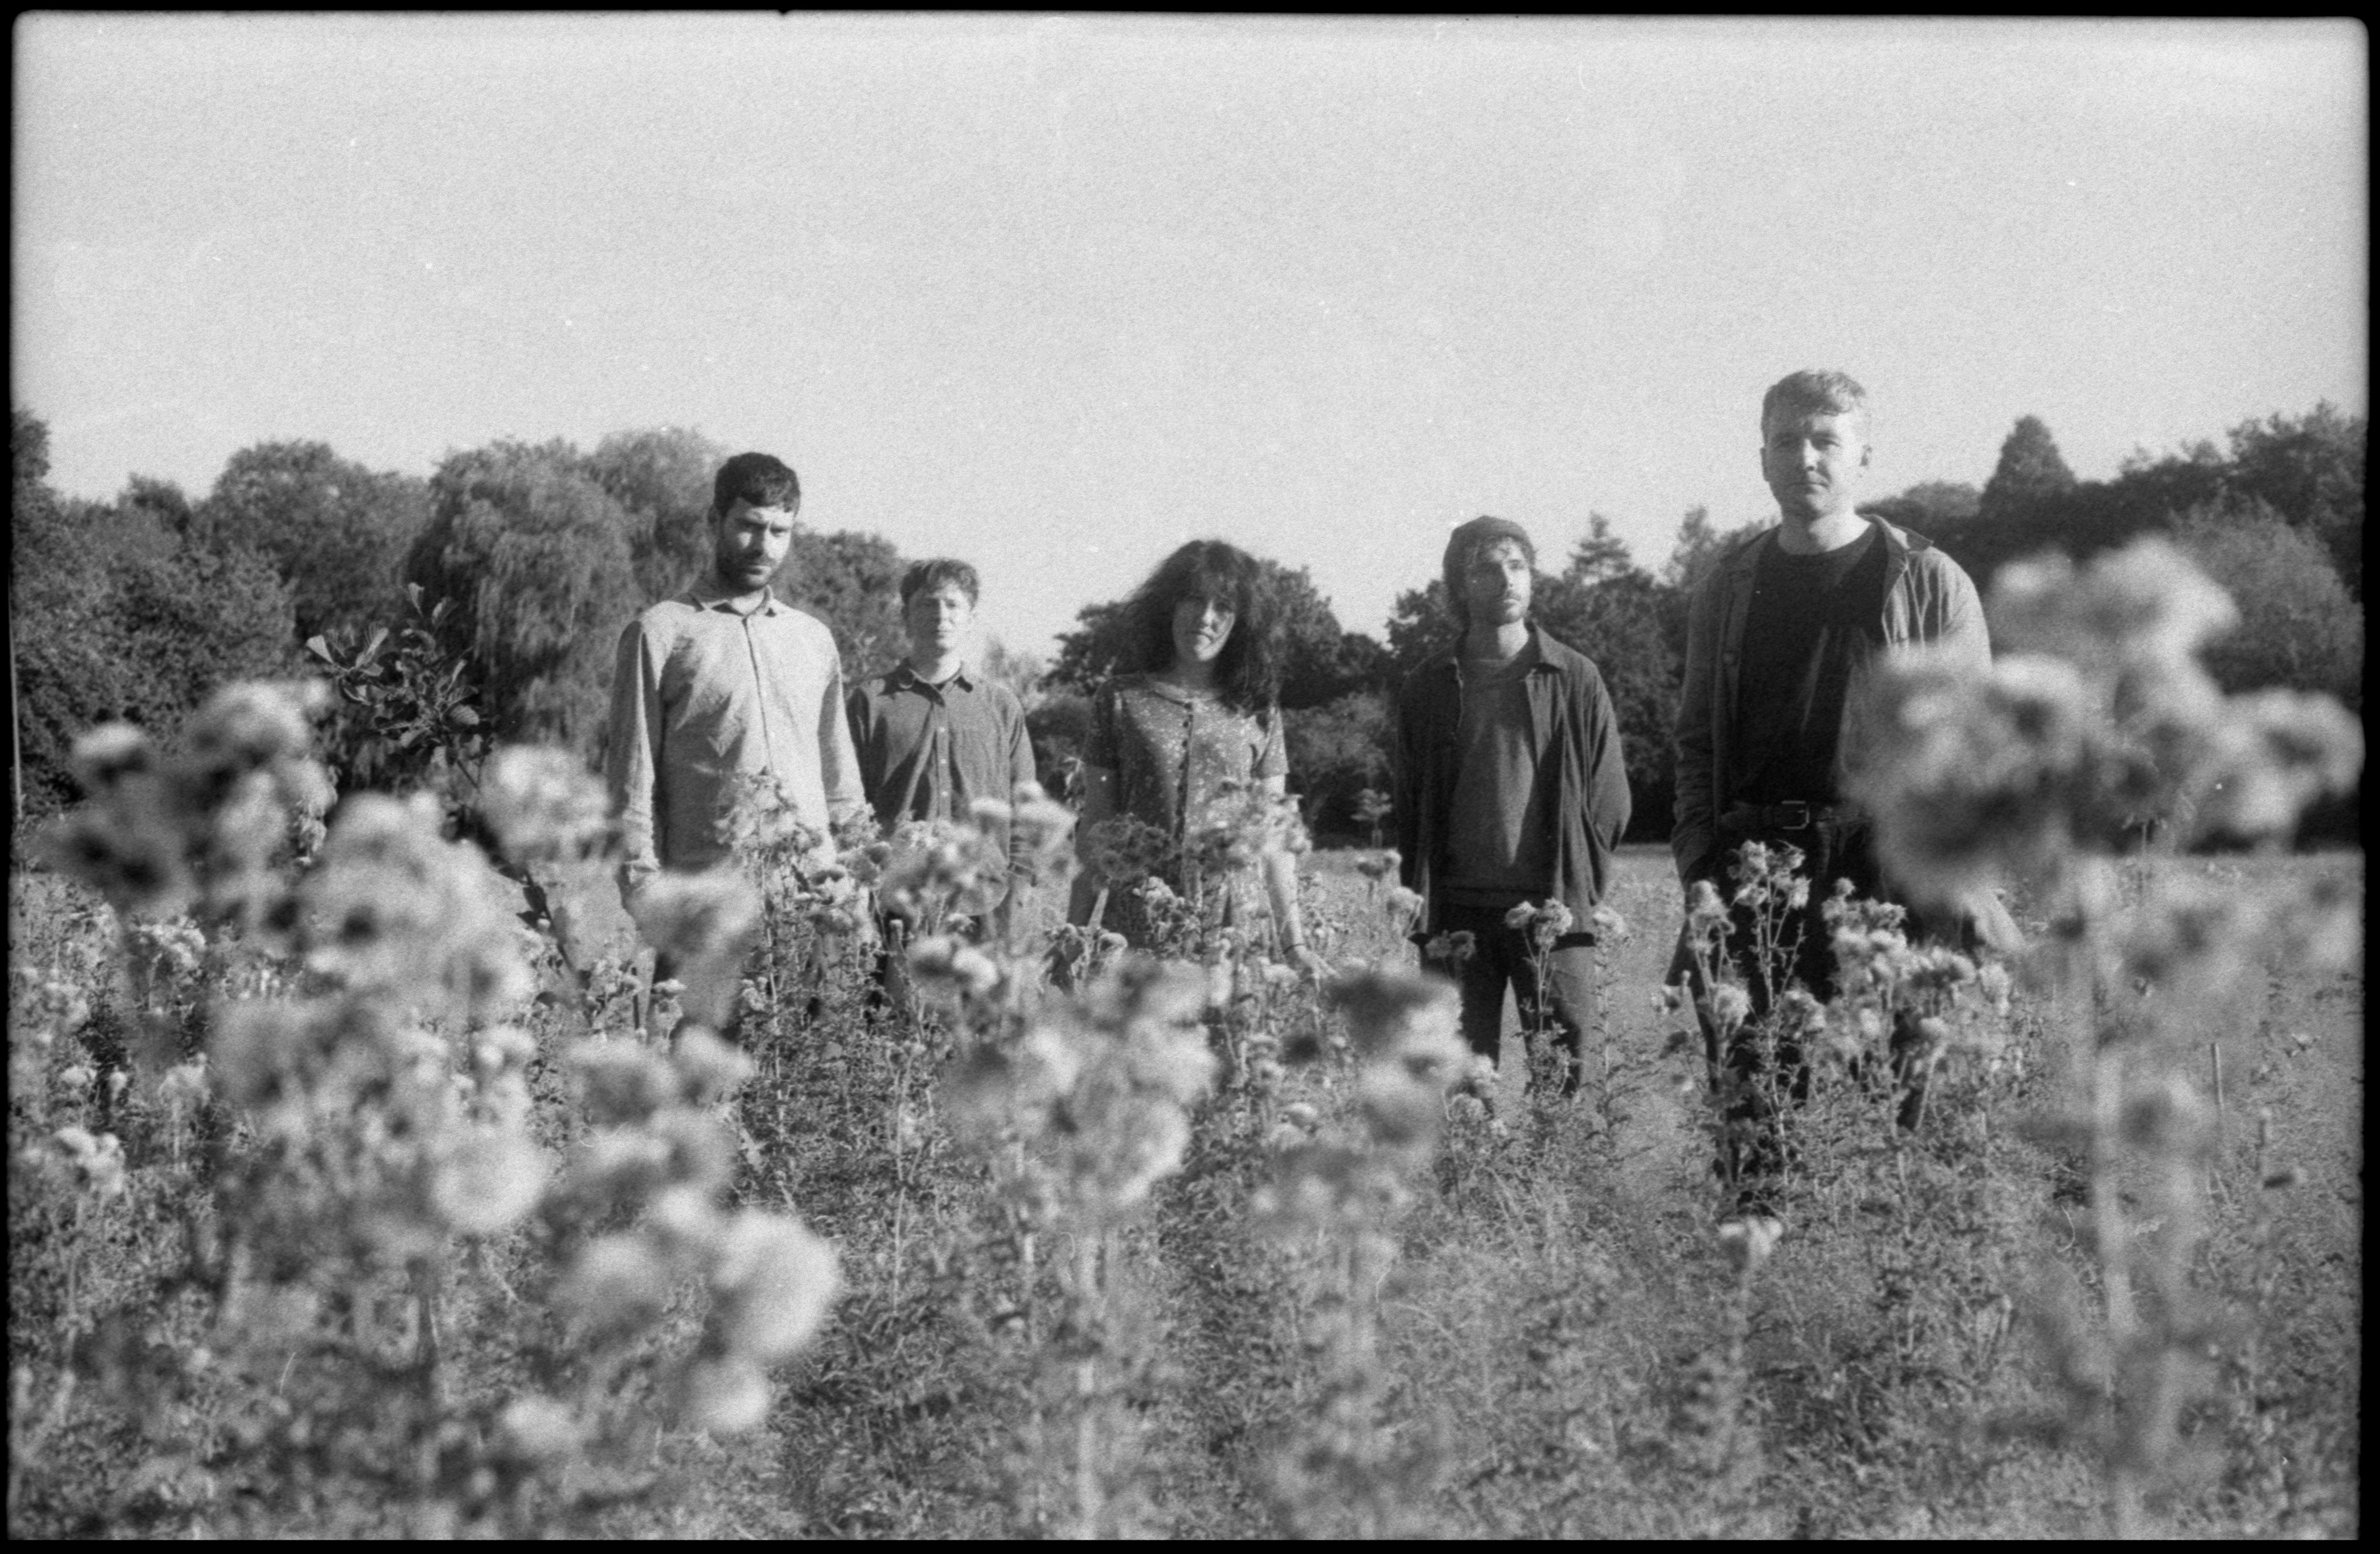 Image of members of Mewn stood in a field 